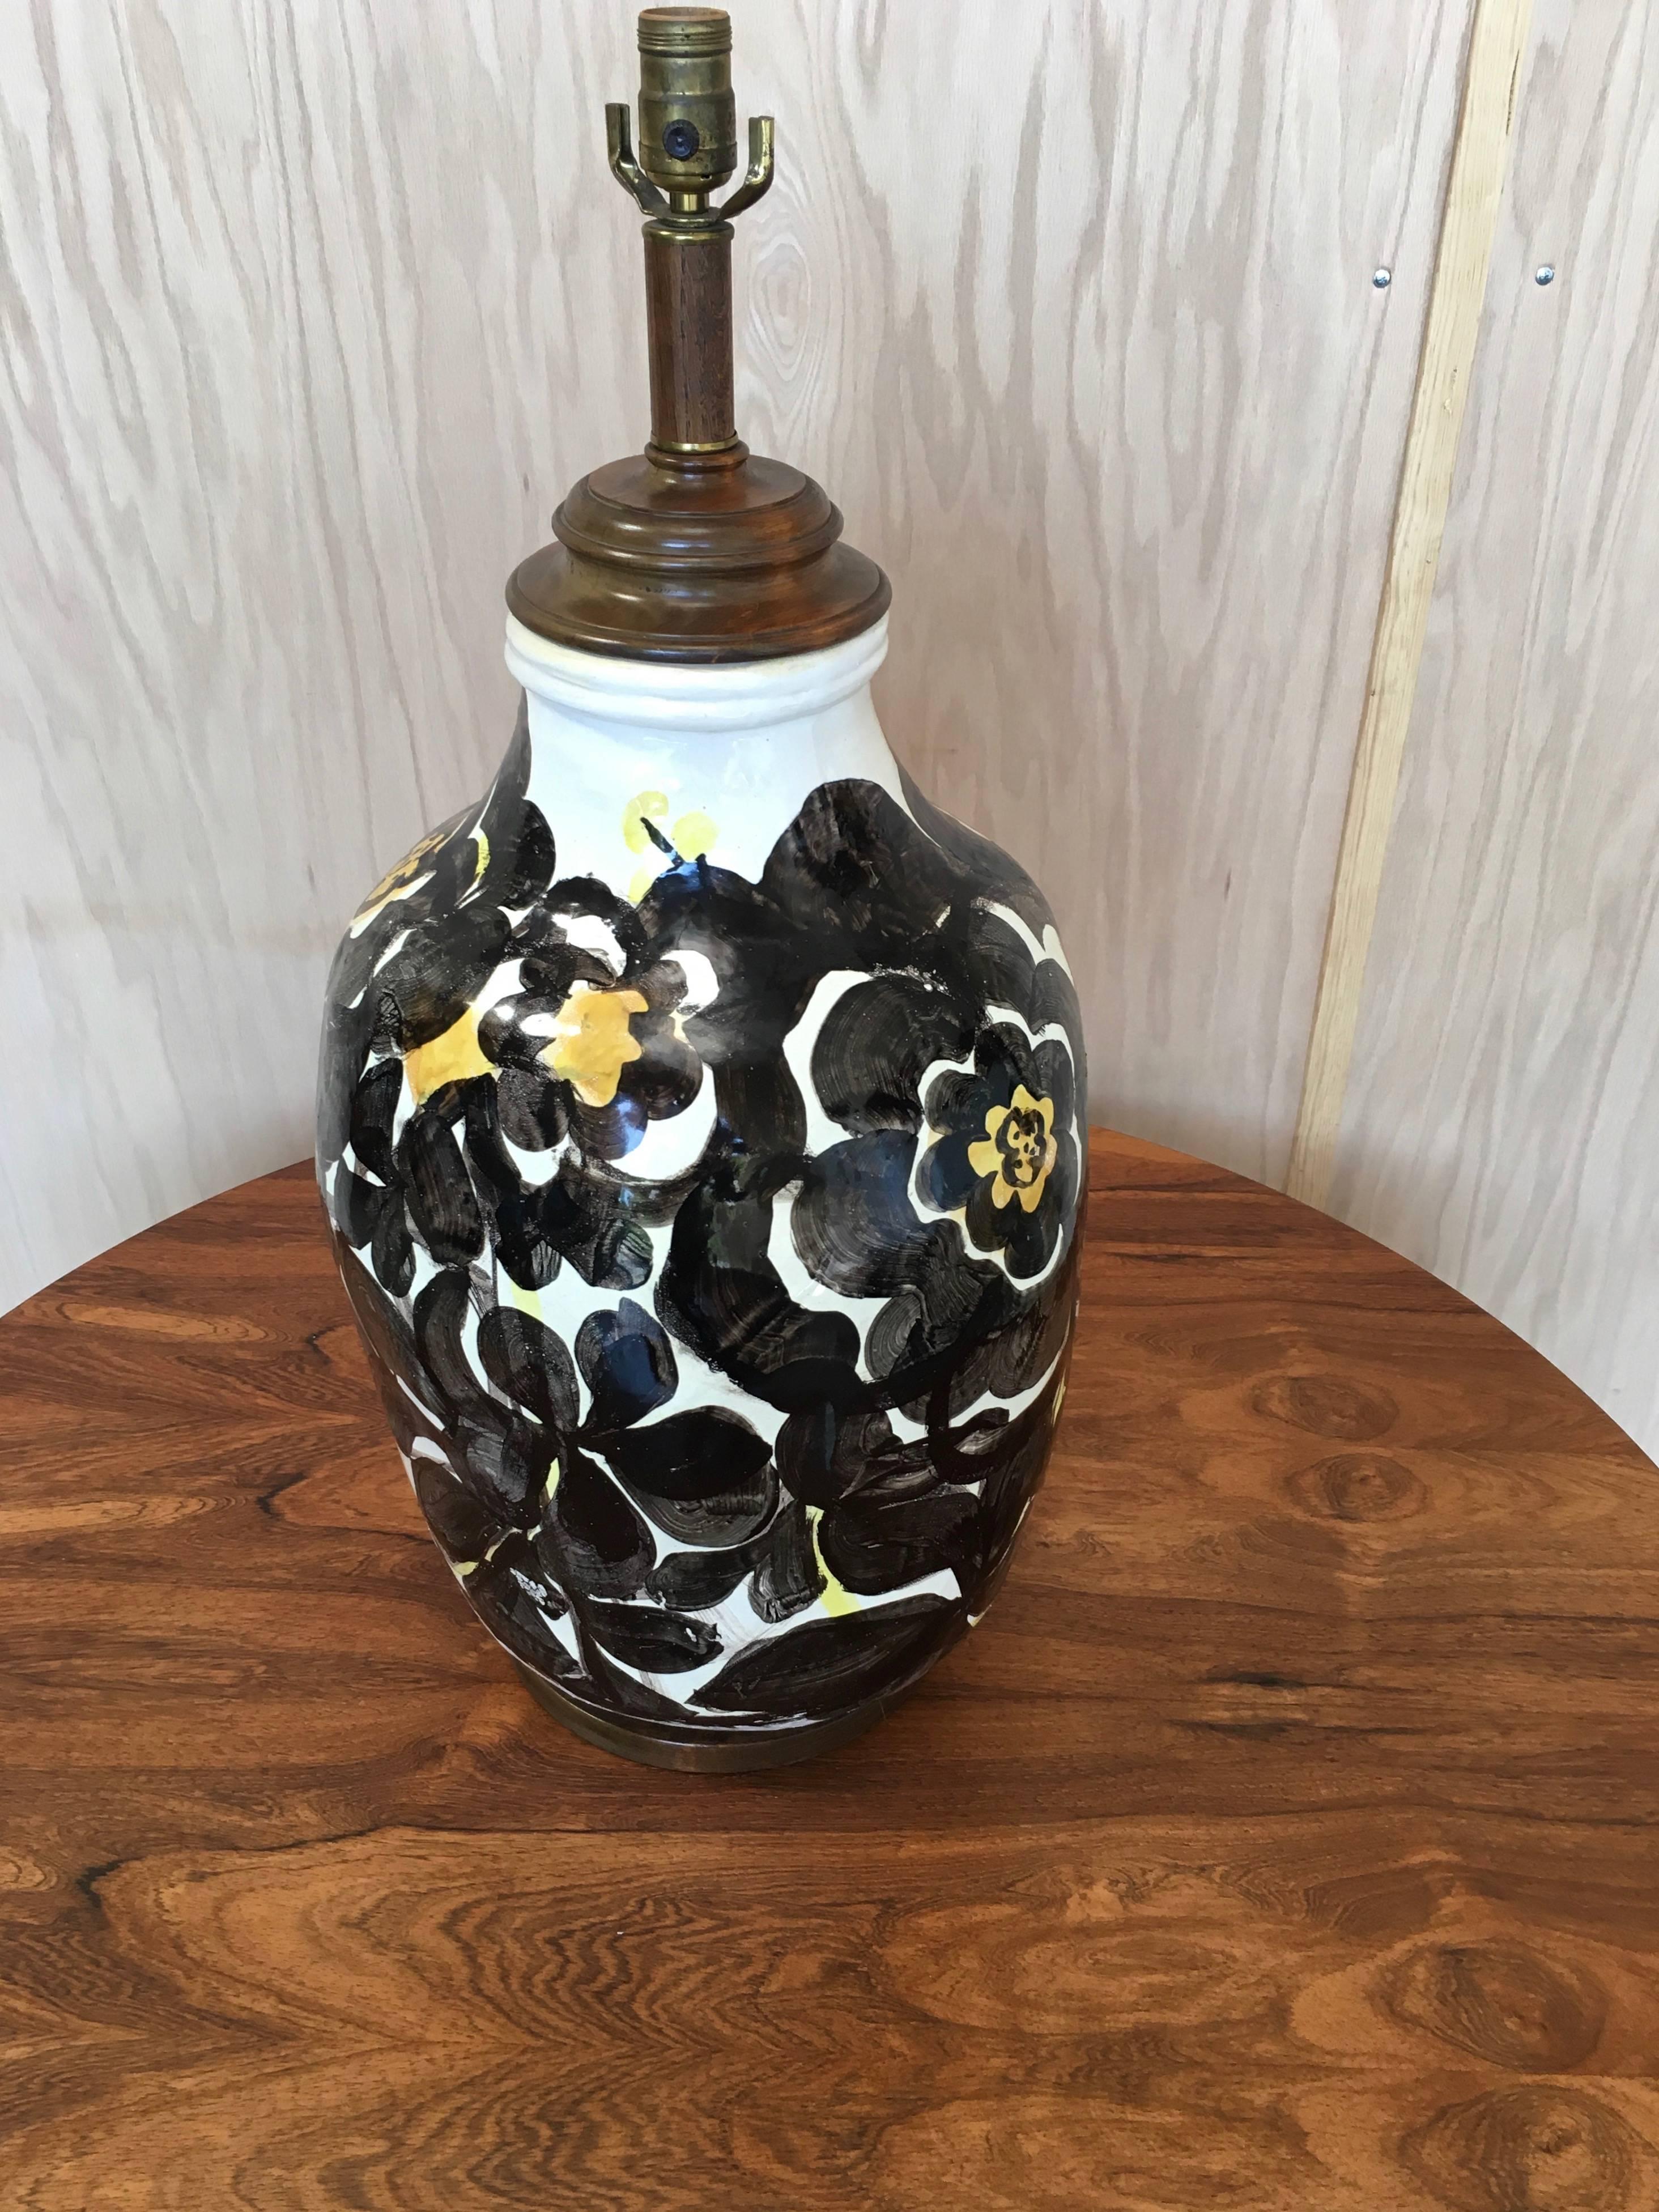 Italian ceramic floral lamp.